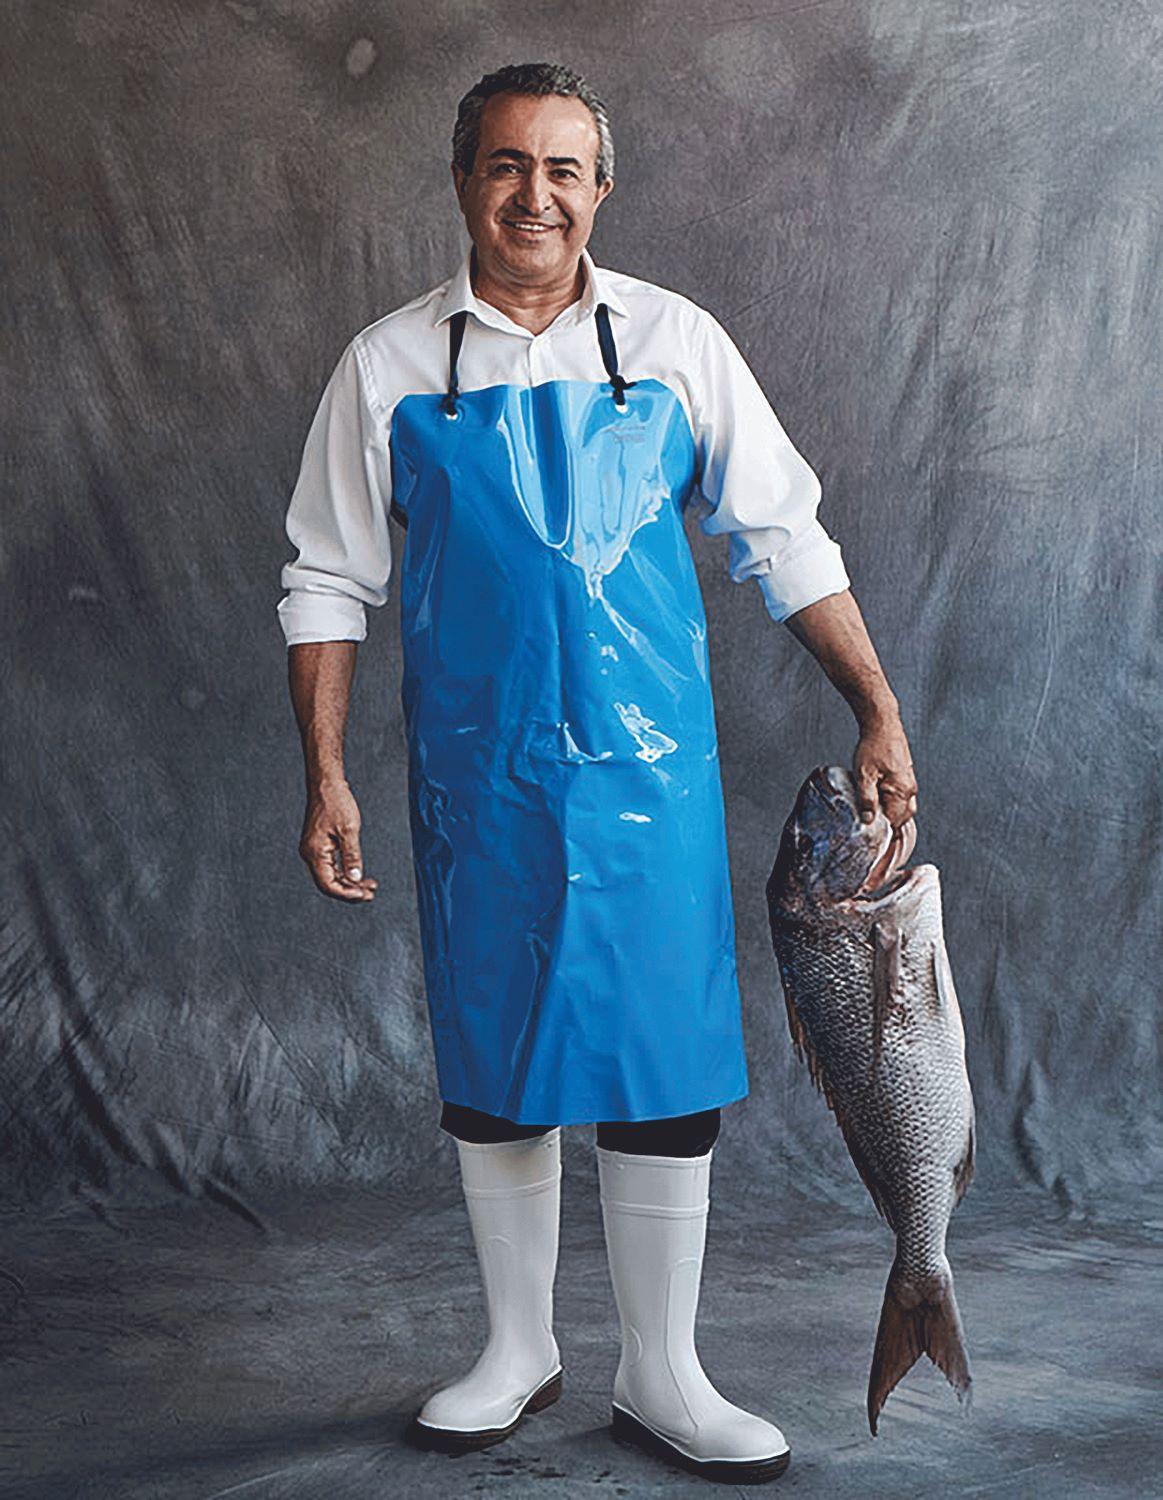 Steve's Catch - Steve Costi's Seafood